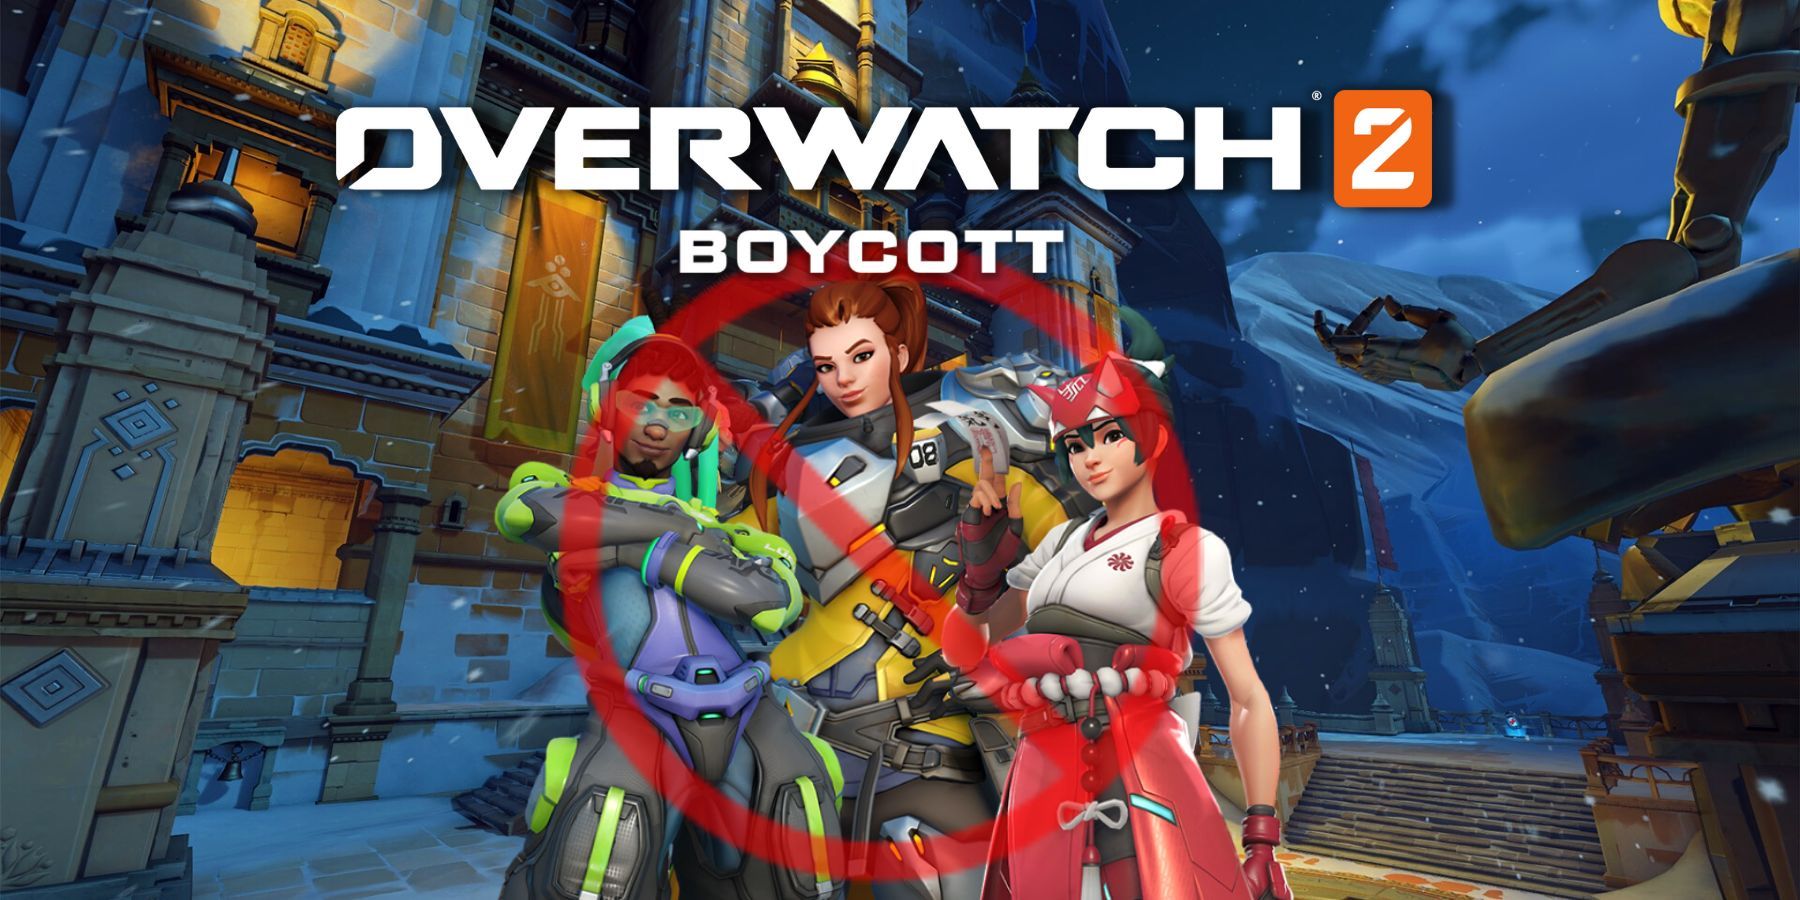 Overwatch 2 Boycott